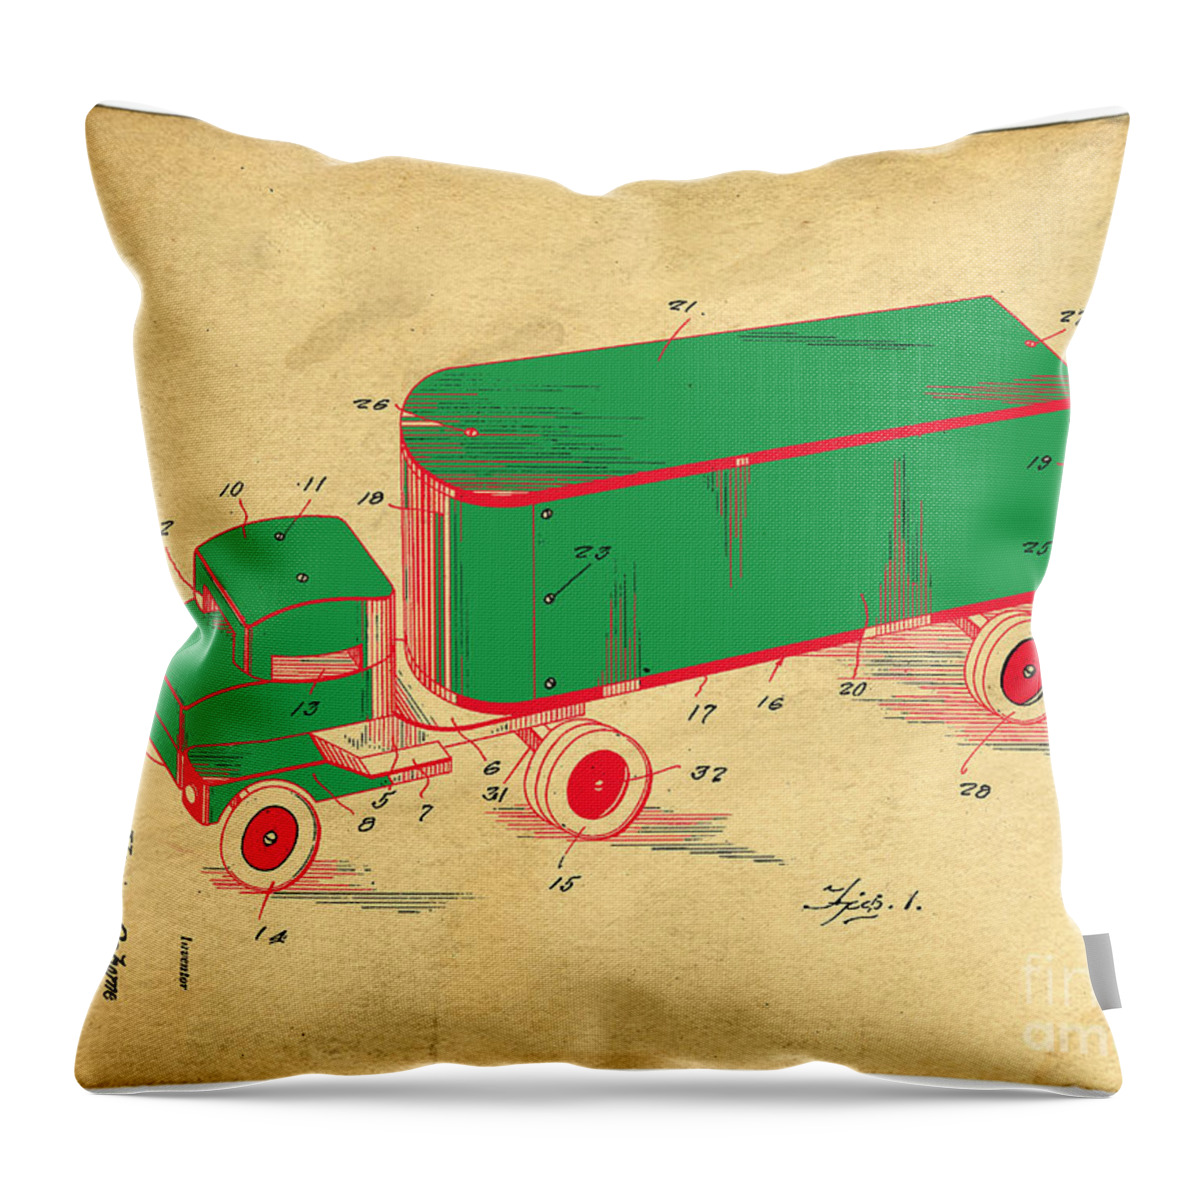 Tonka Throw Pillow featuring the digital art Tonka Truck Patent by Edward Fielding